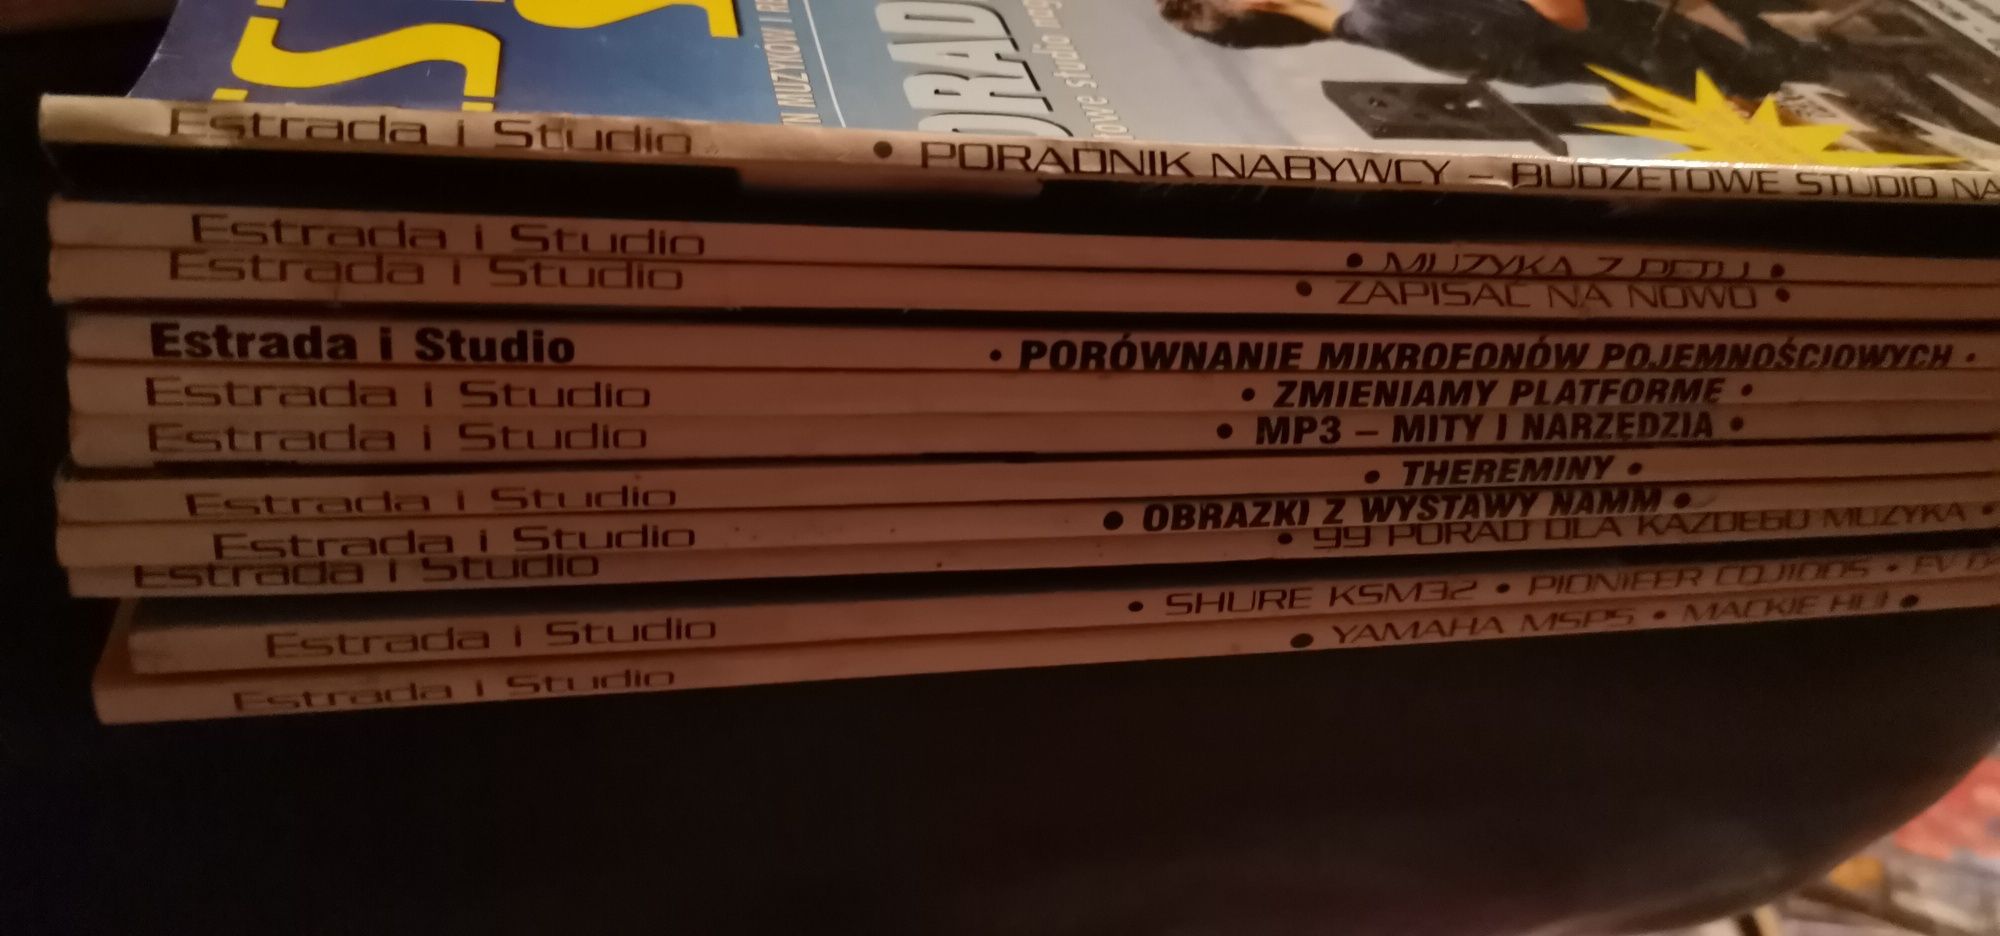 Estrada i Studio czasopismo 12 numerow cały1999r